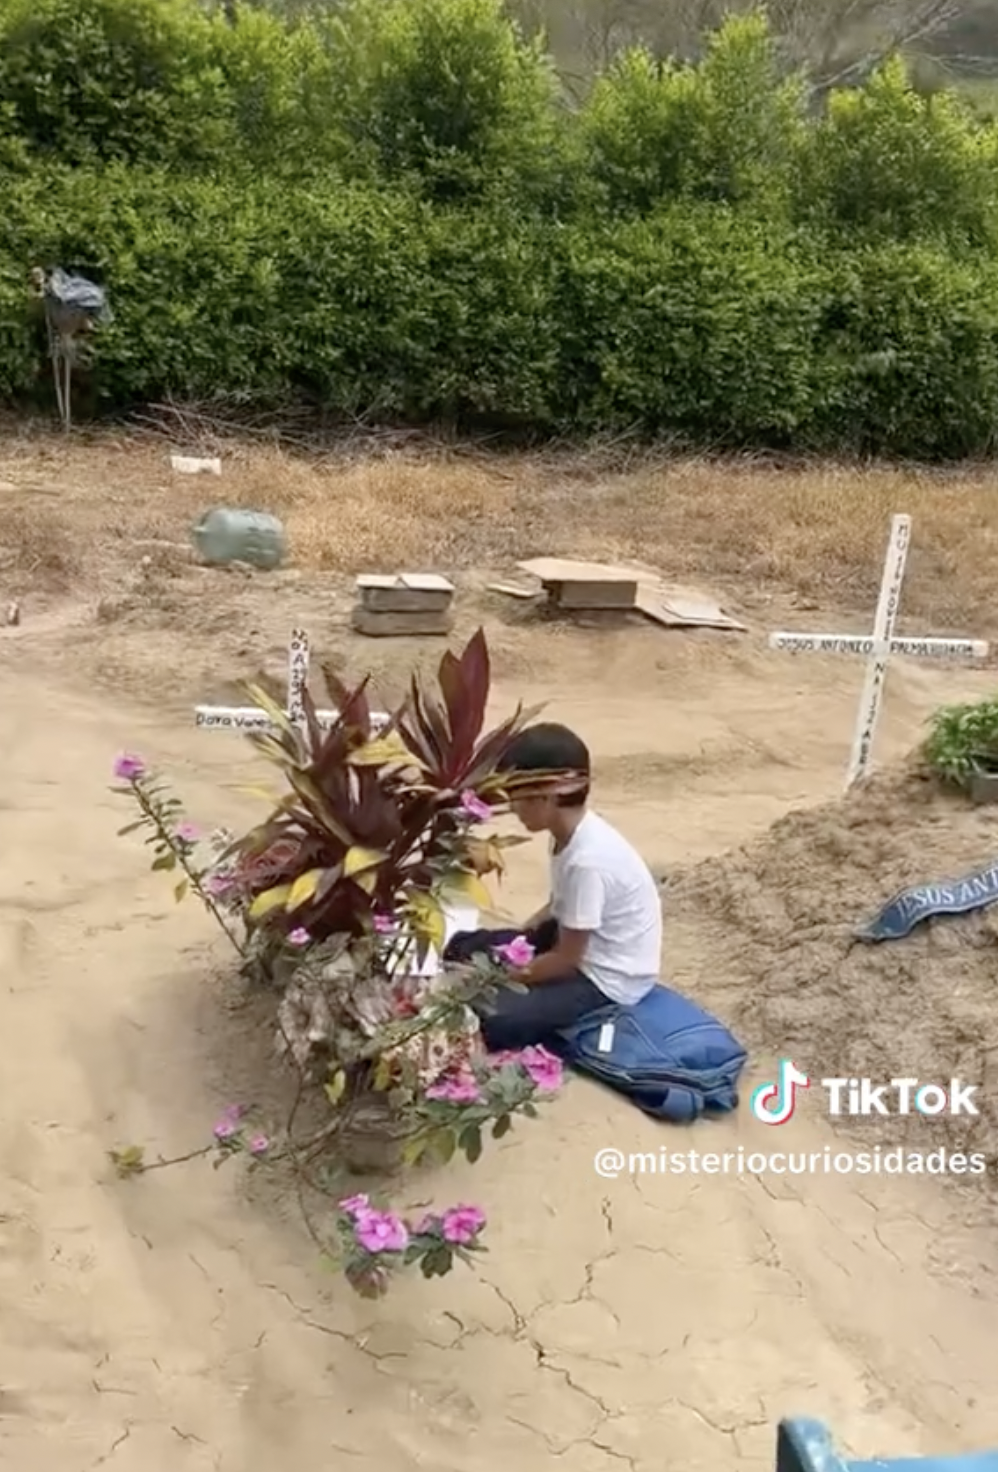 Kike am Grab seiner Mutter. | Quelle: tiktok.com/@misteriocuriosidades